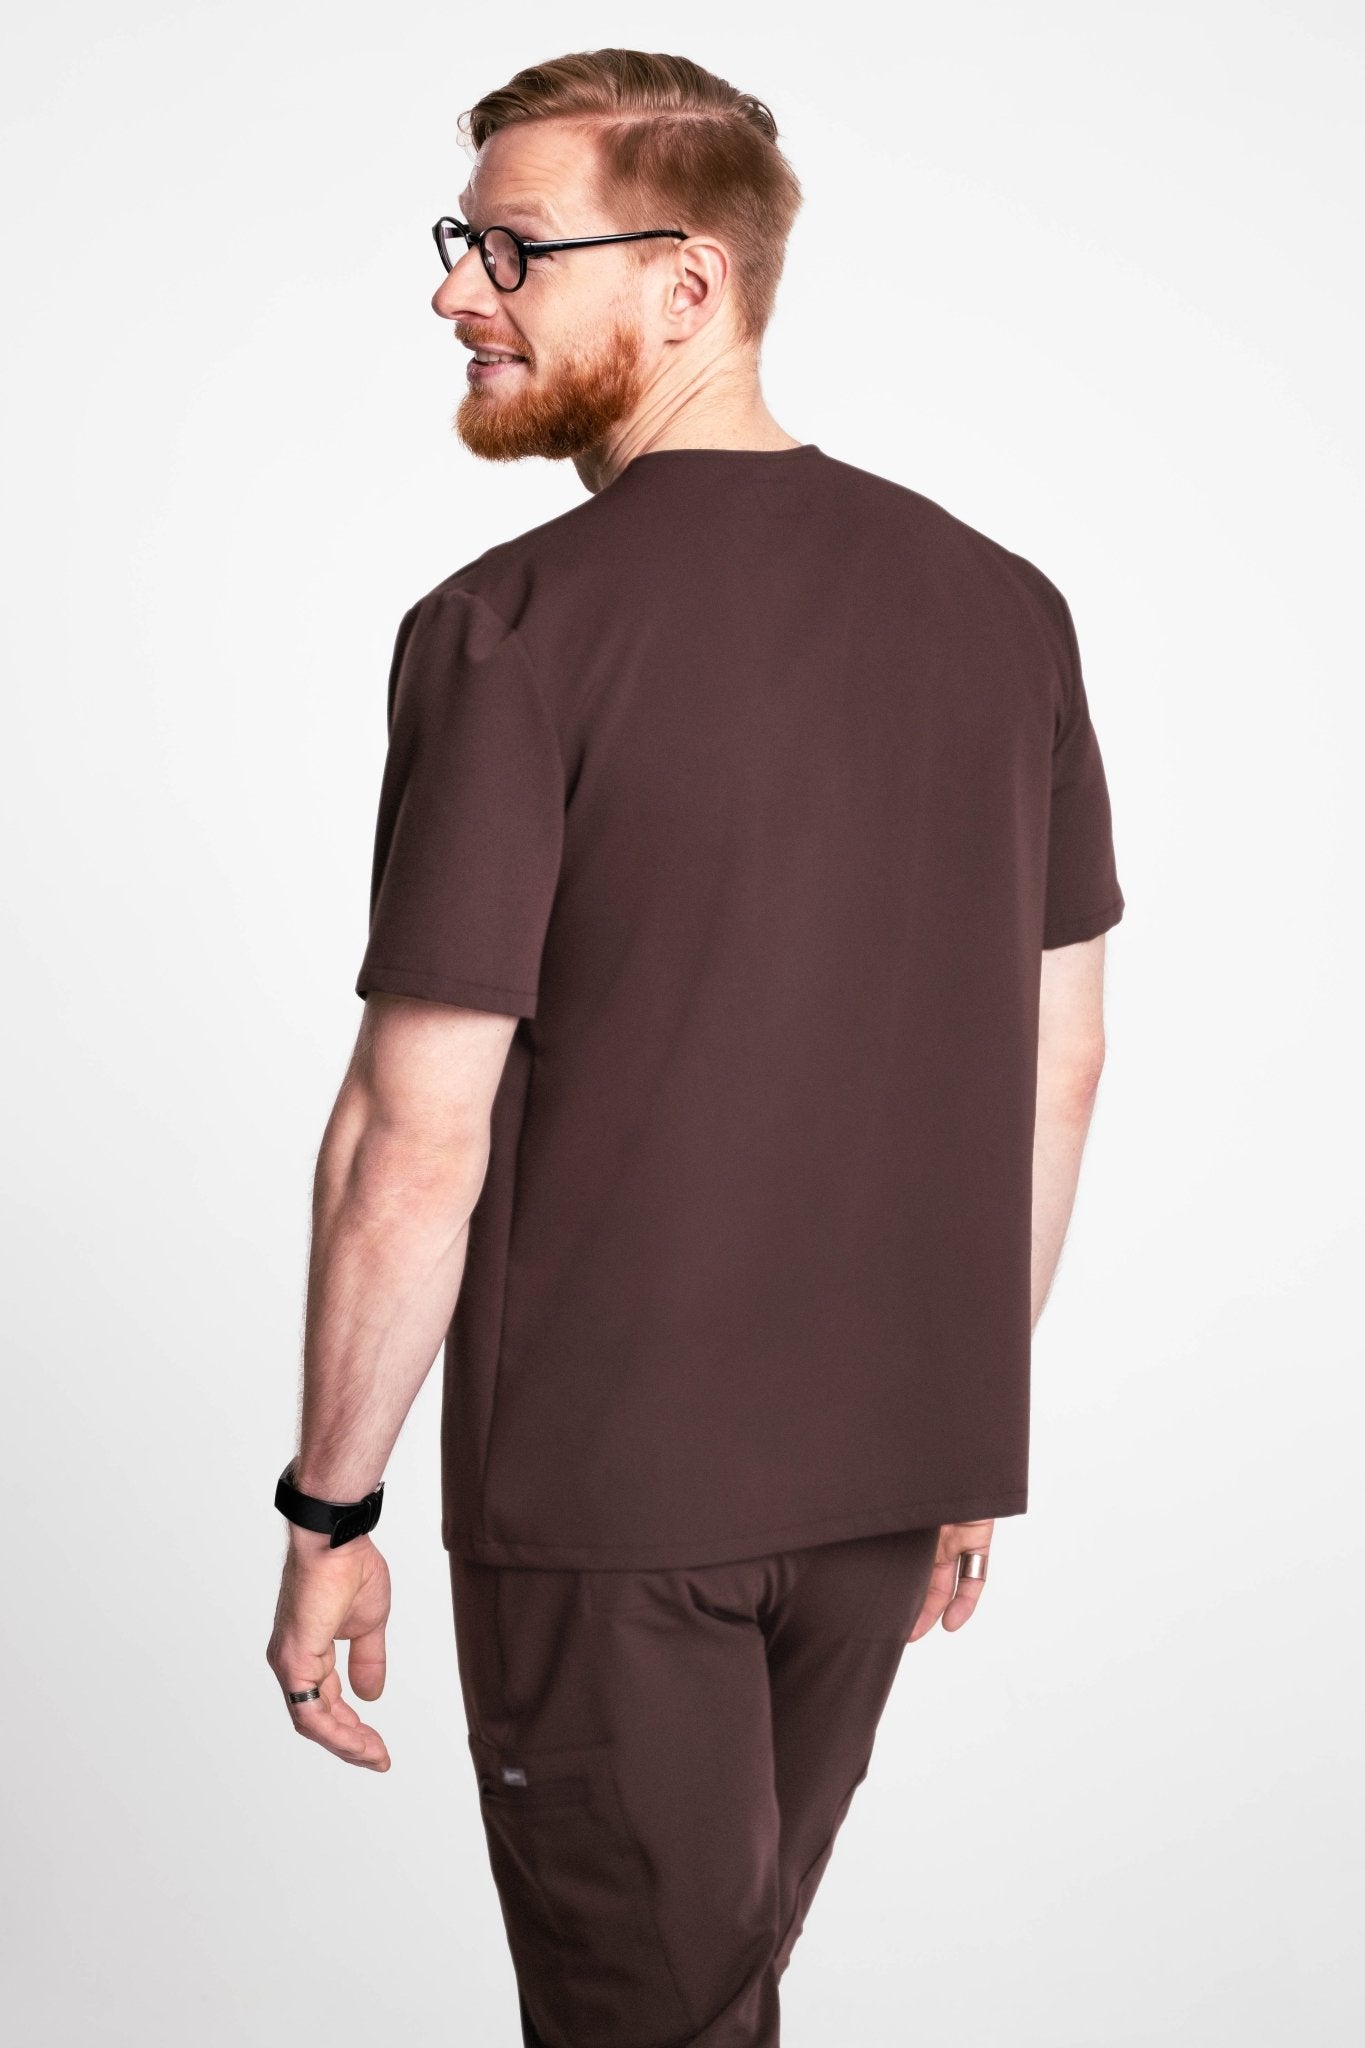 Bluza medyczna męska PACE - kolor brązowy